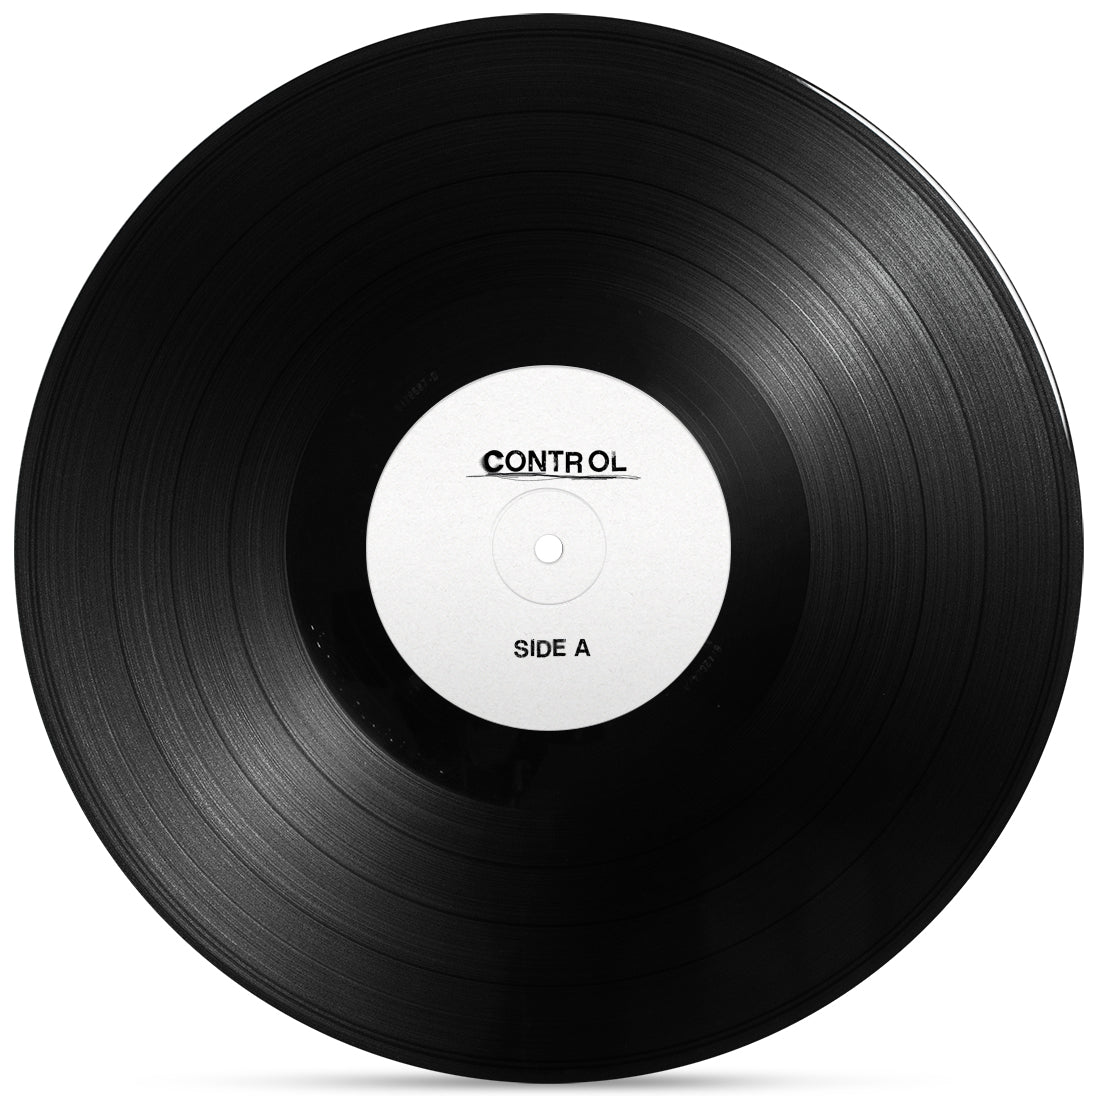 Control (Remastered Vinyl Reissue)